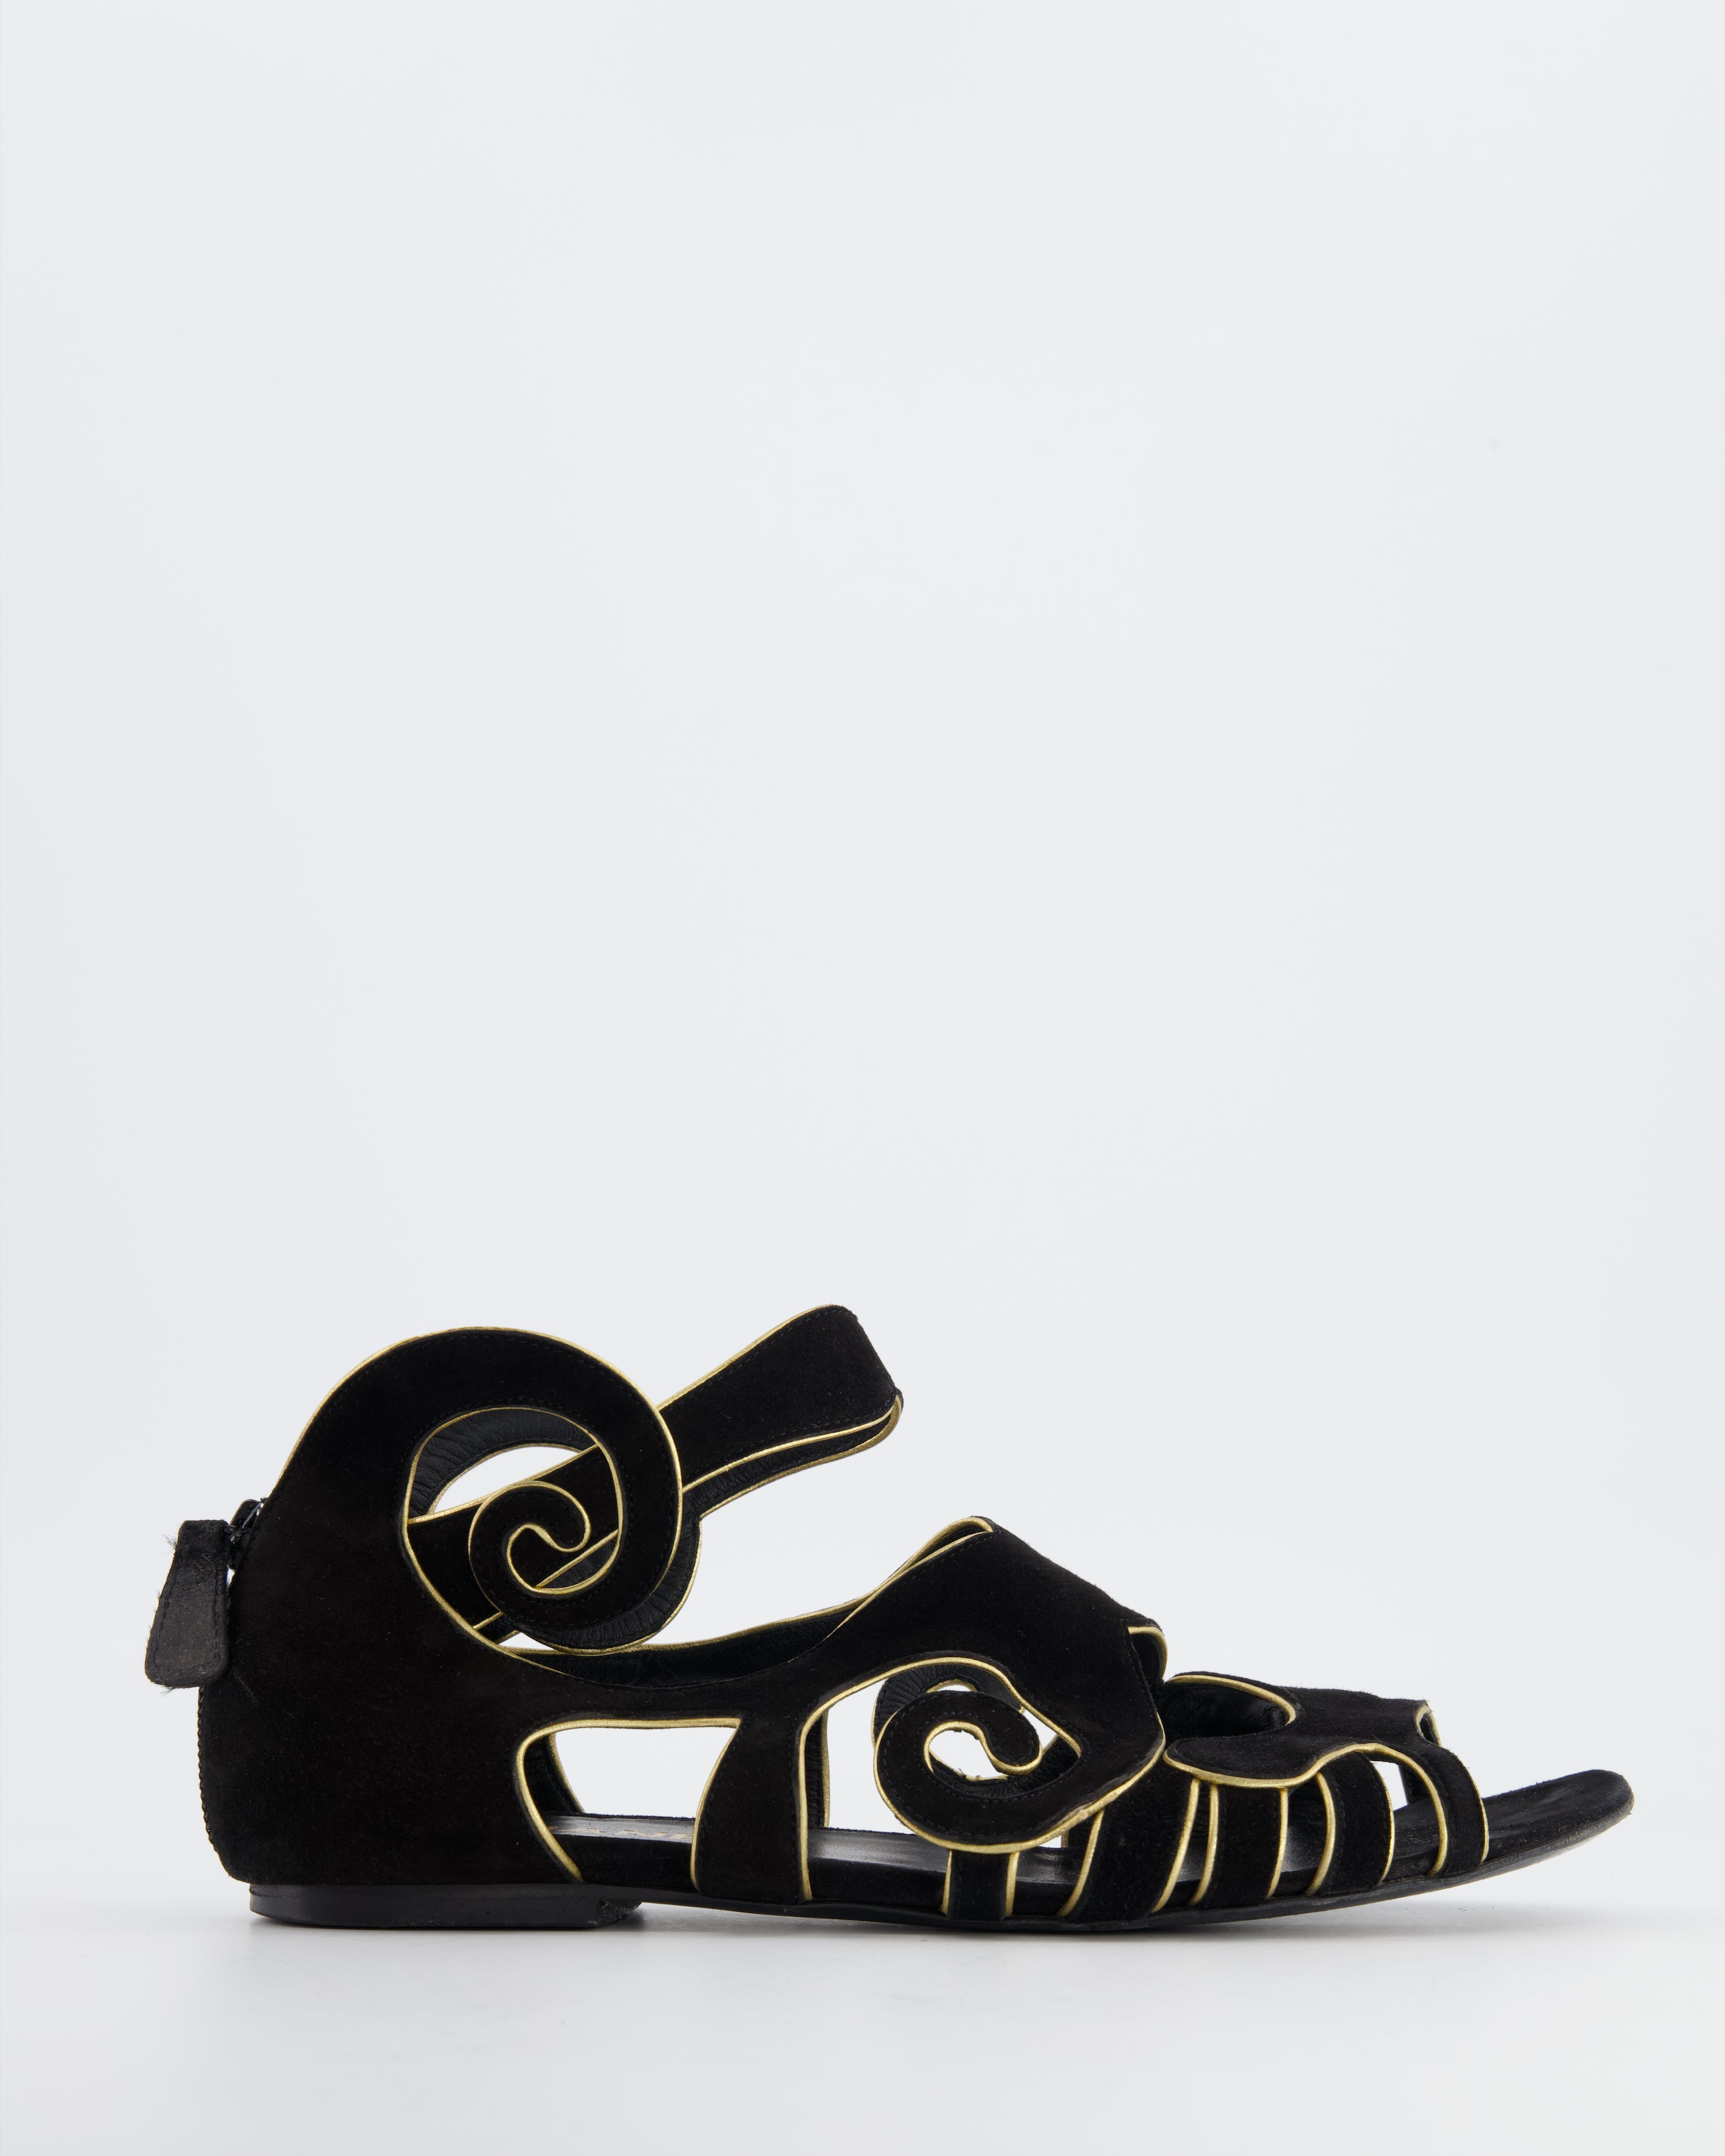 Louis Vuitton - Authenticated Sandal - Suede Black Plain for Women, Very Good Condition